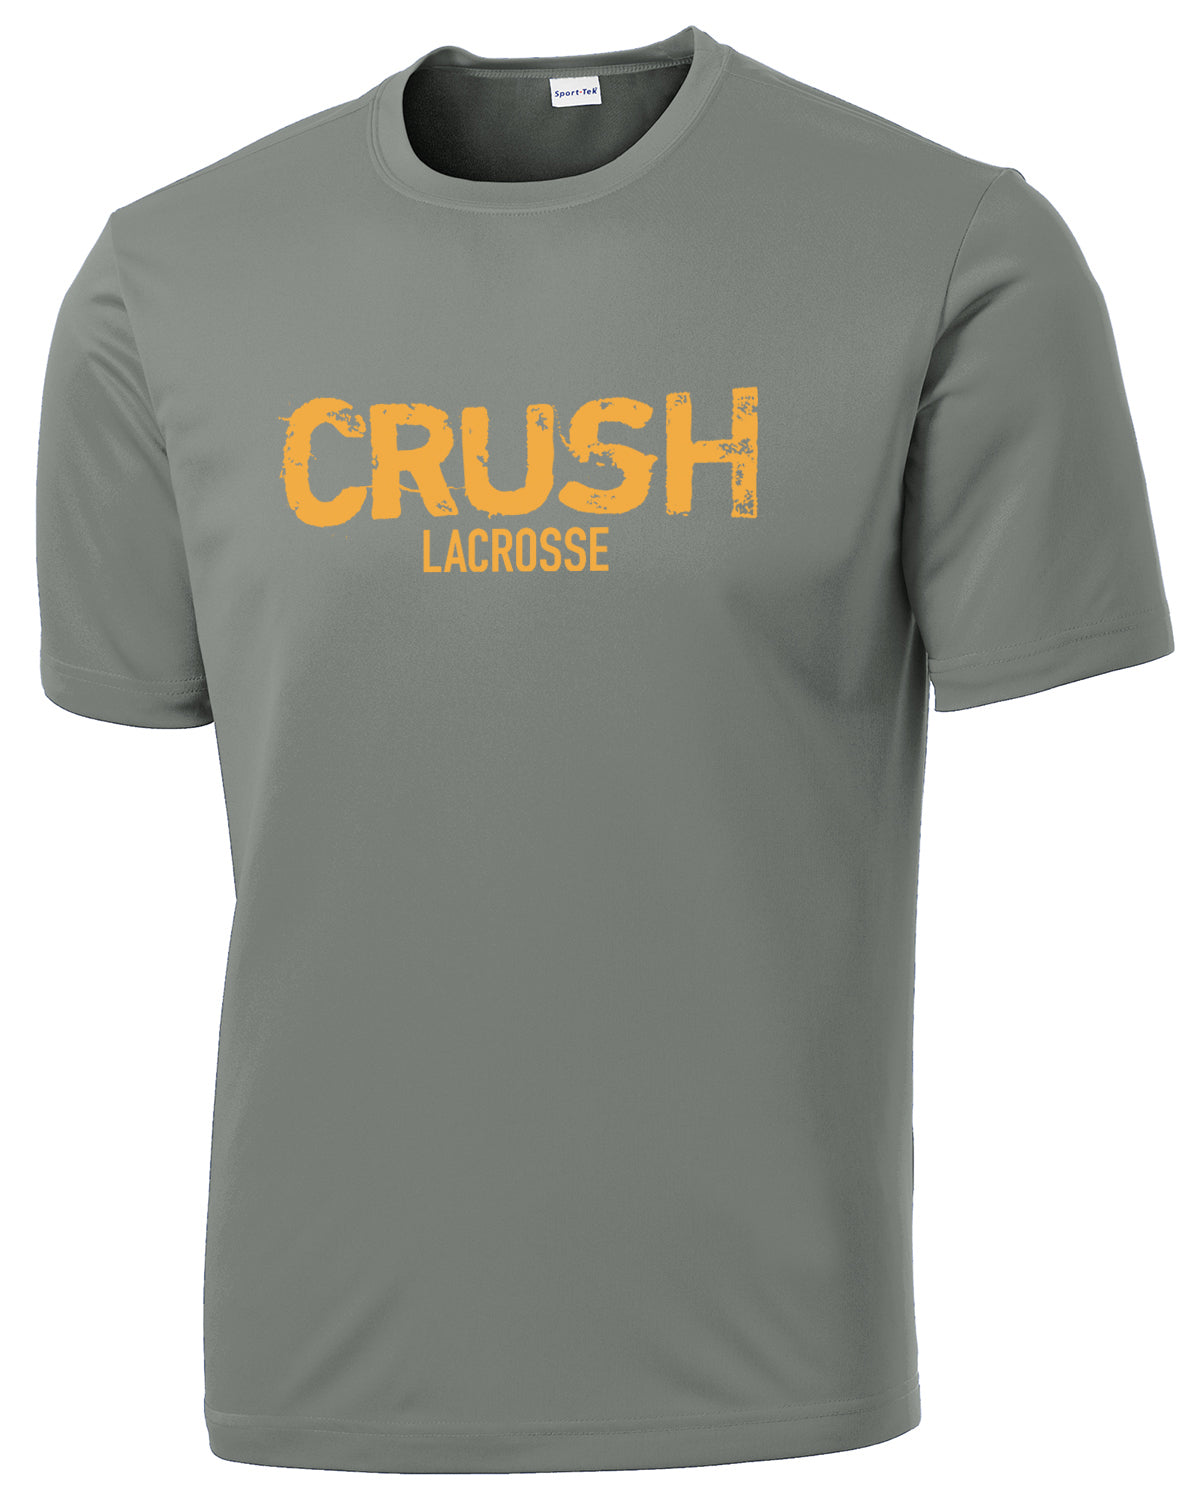 Crush Lacrosse Concrete Grey Performance T-Shirt